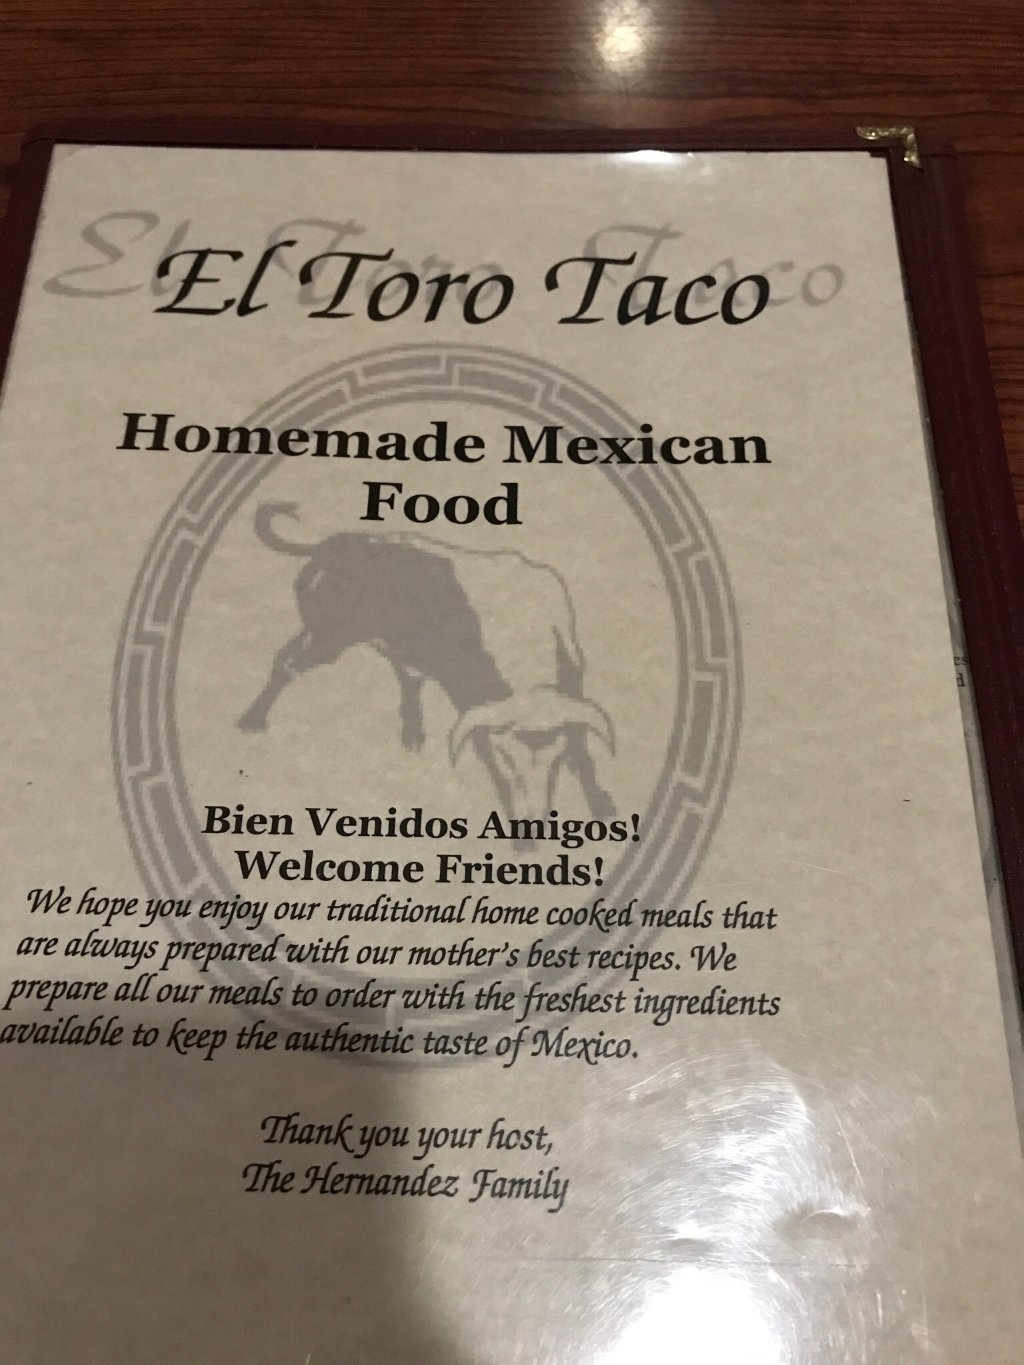 El Toro Taco